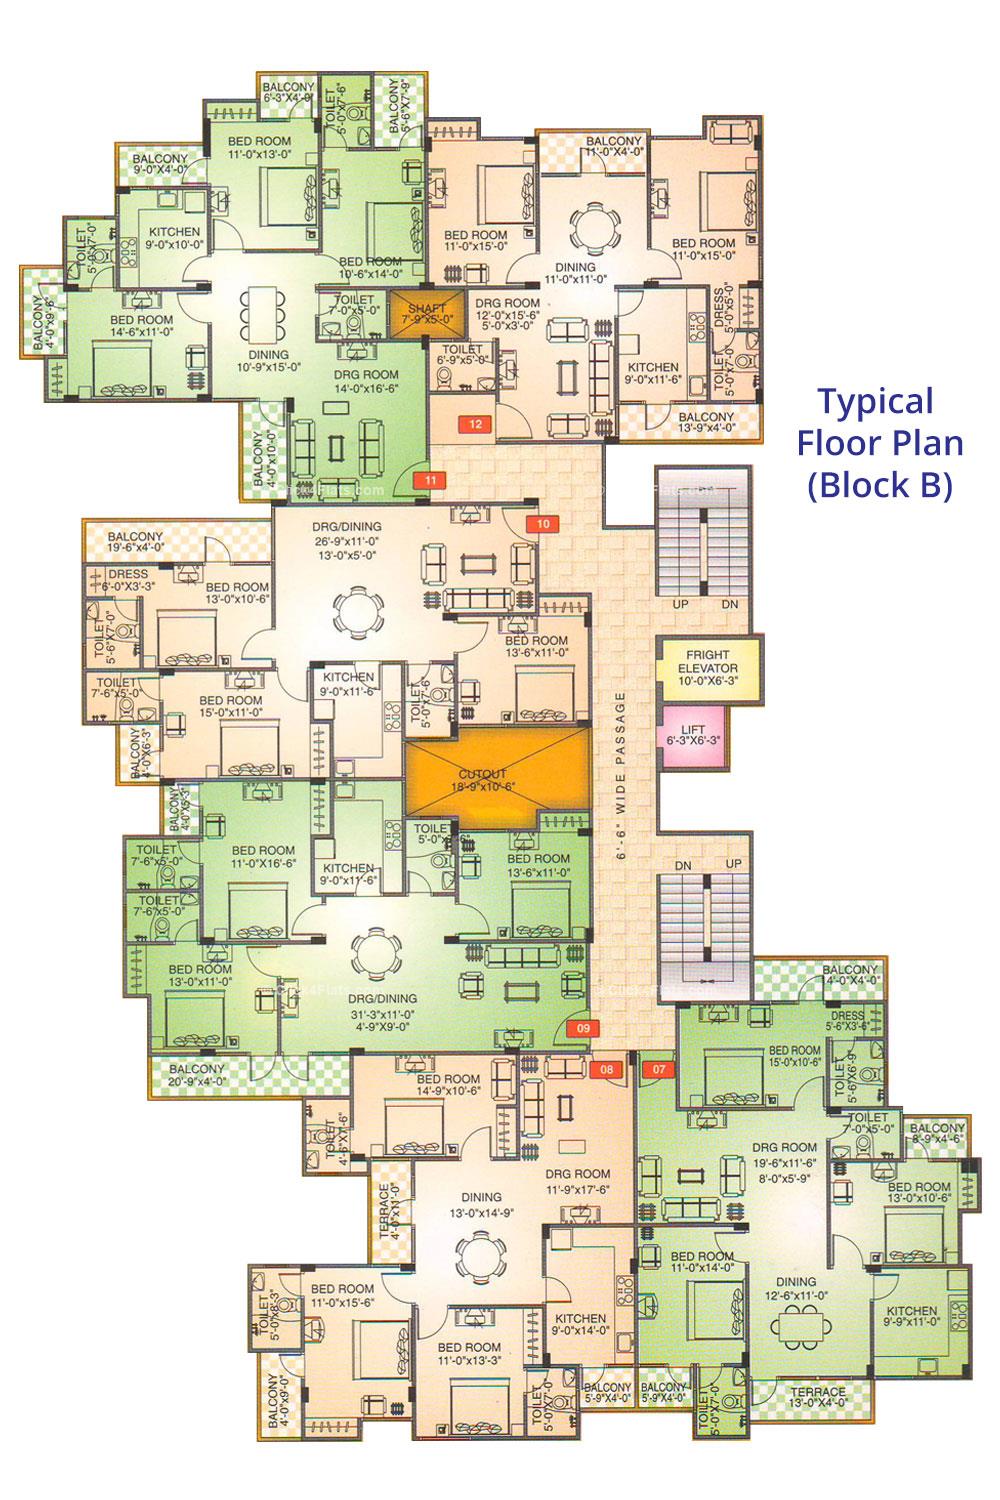 Shivgyan Enclave Typical Floor Plan (Block B)